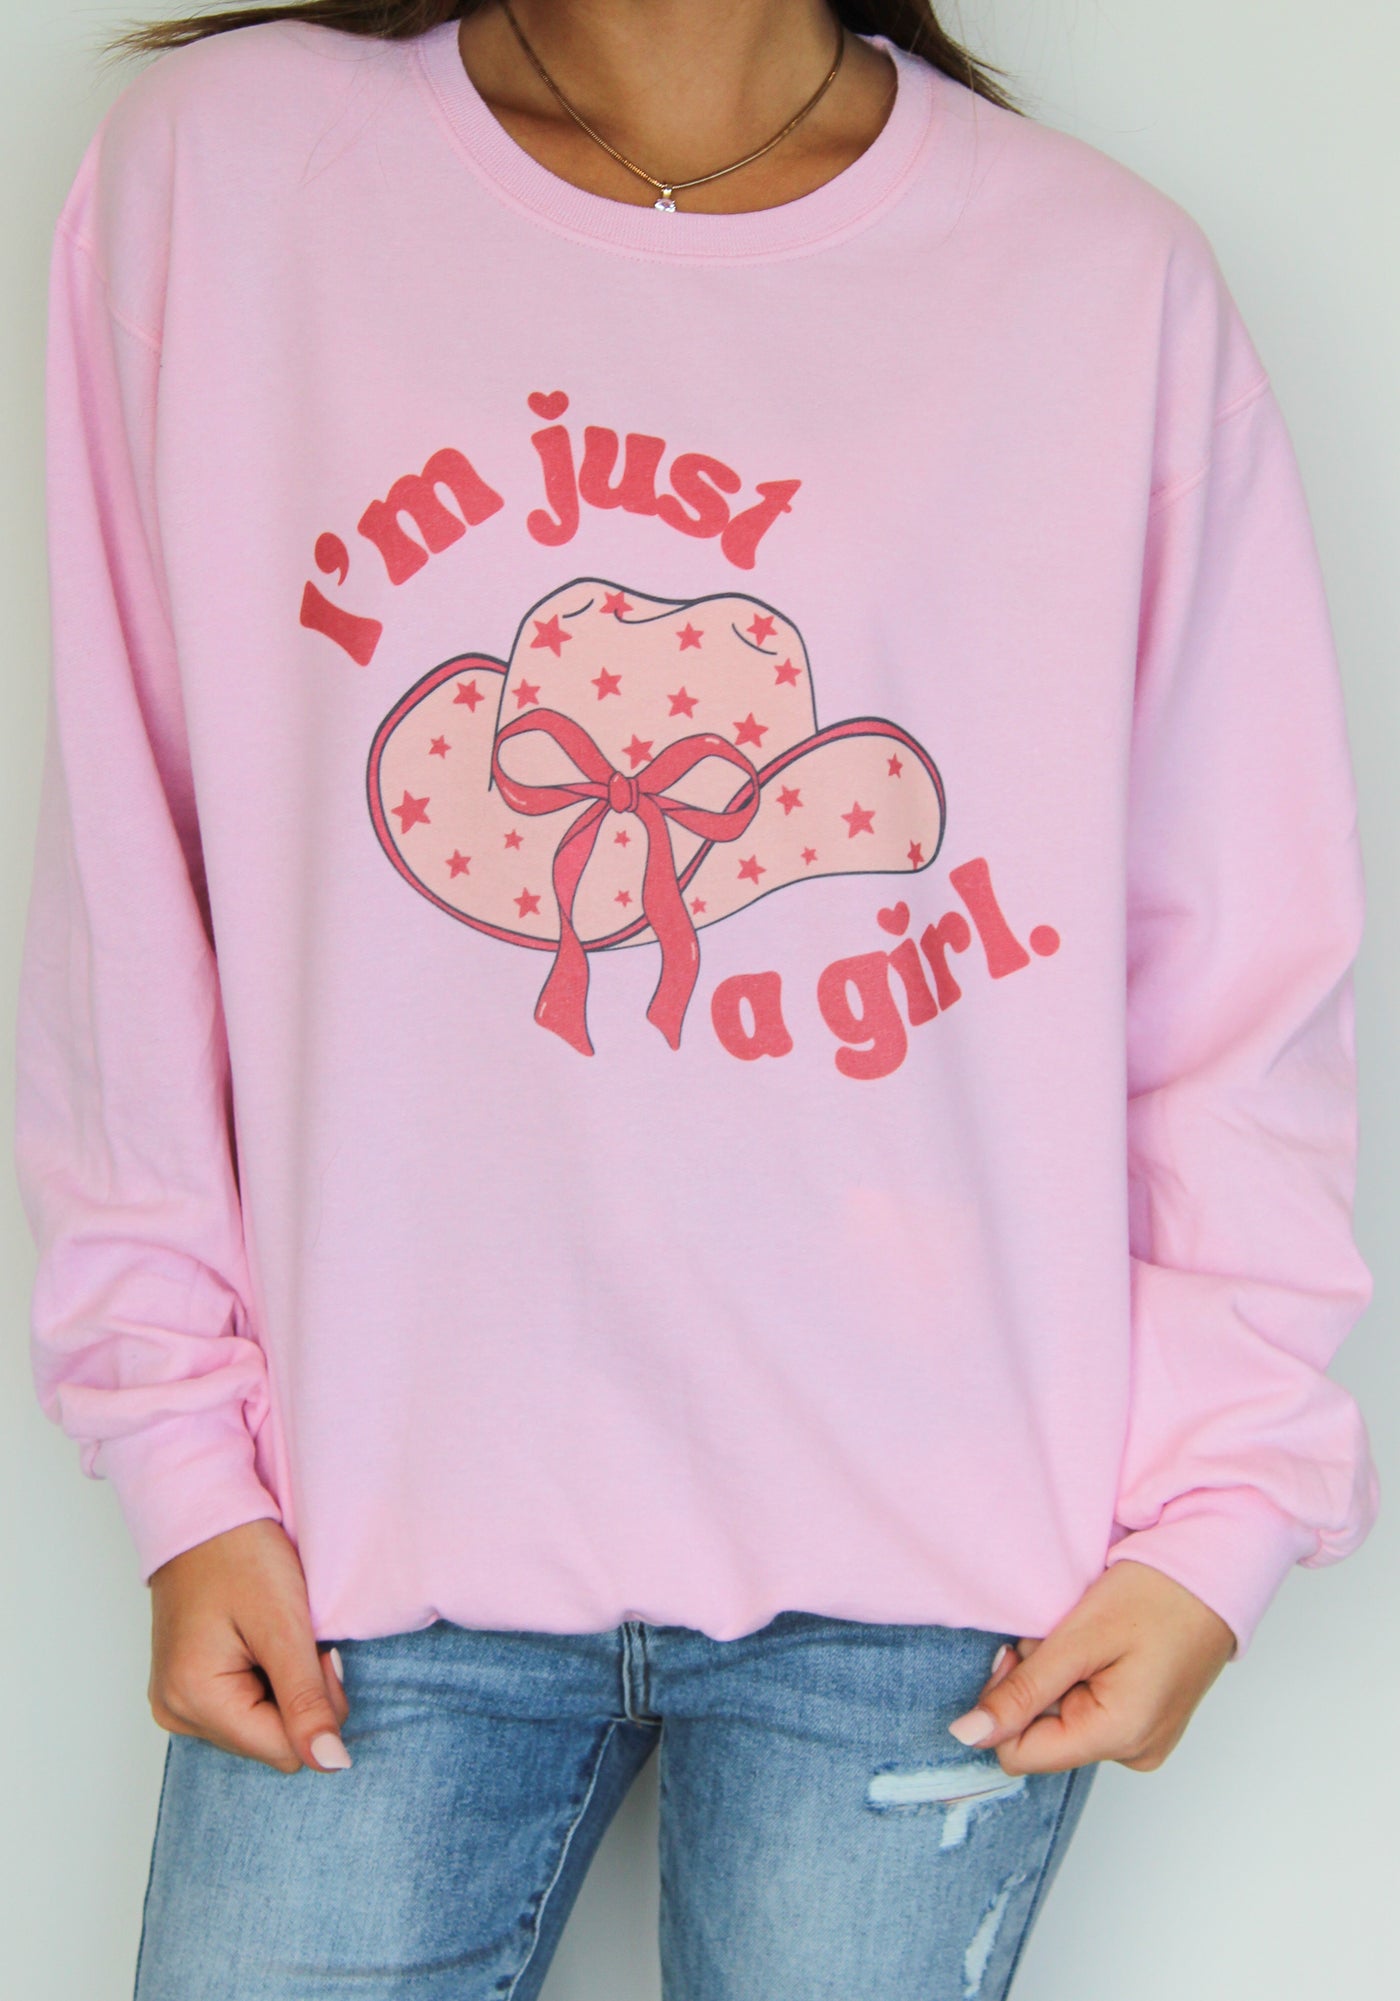 Just A Girl Graphic Sweatshirt-135 - DEMAND GRAPHIC-LEATHER & LACE-[option4]-[option5]-[option6]-Leather & Lace Boutique Shop